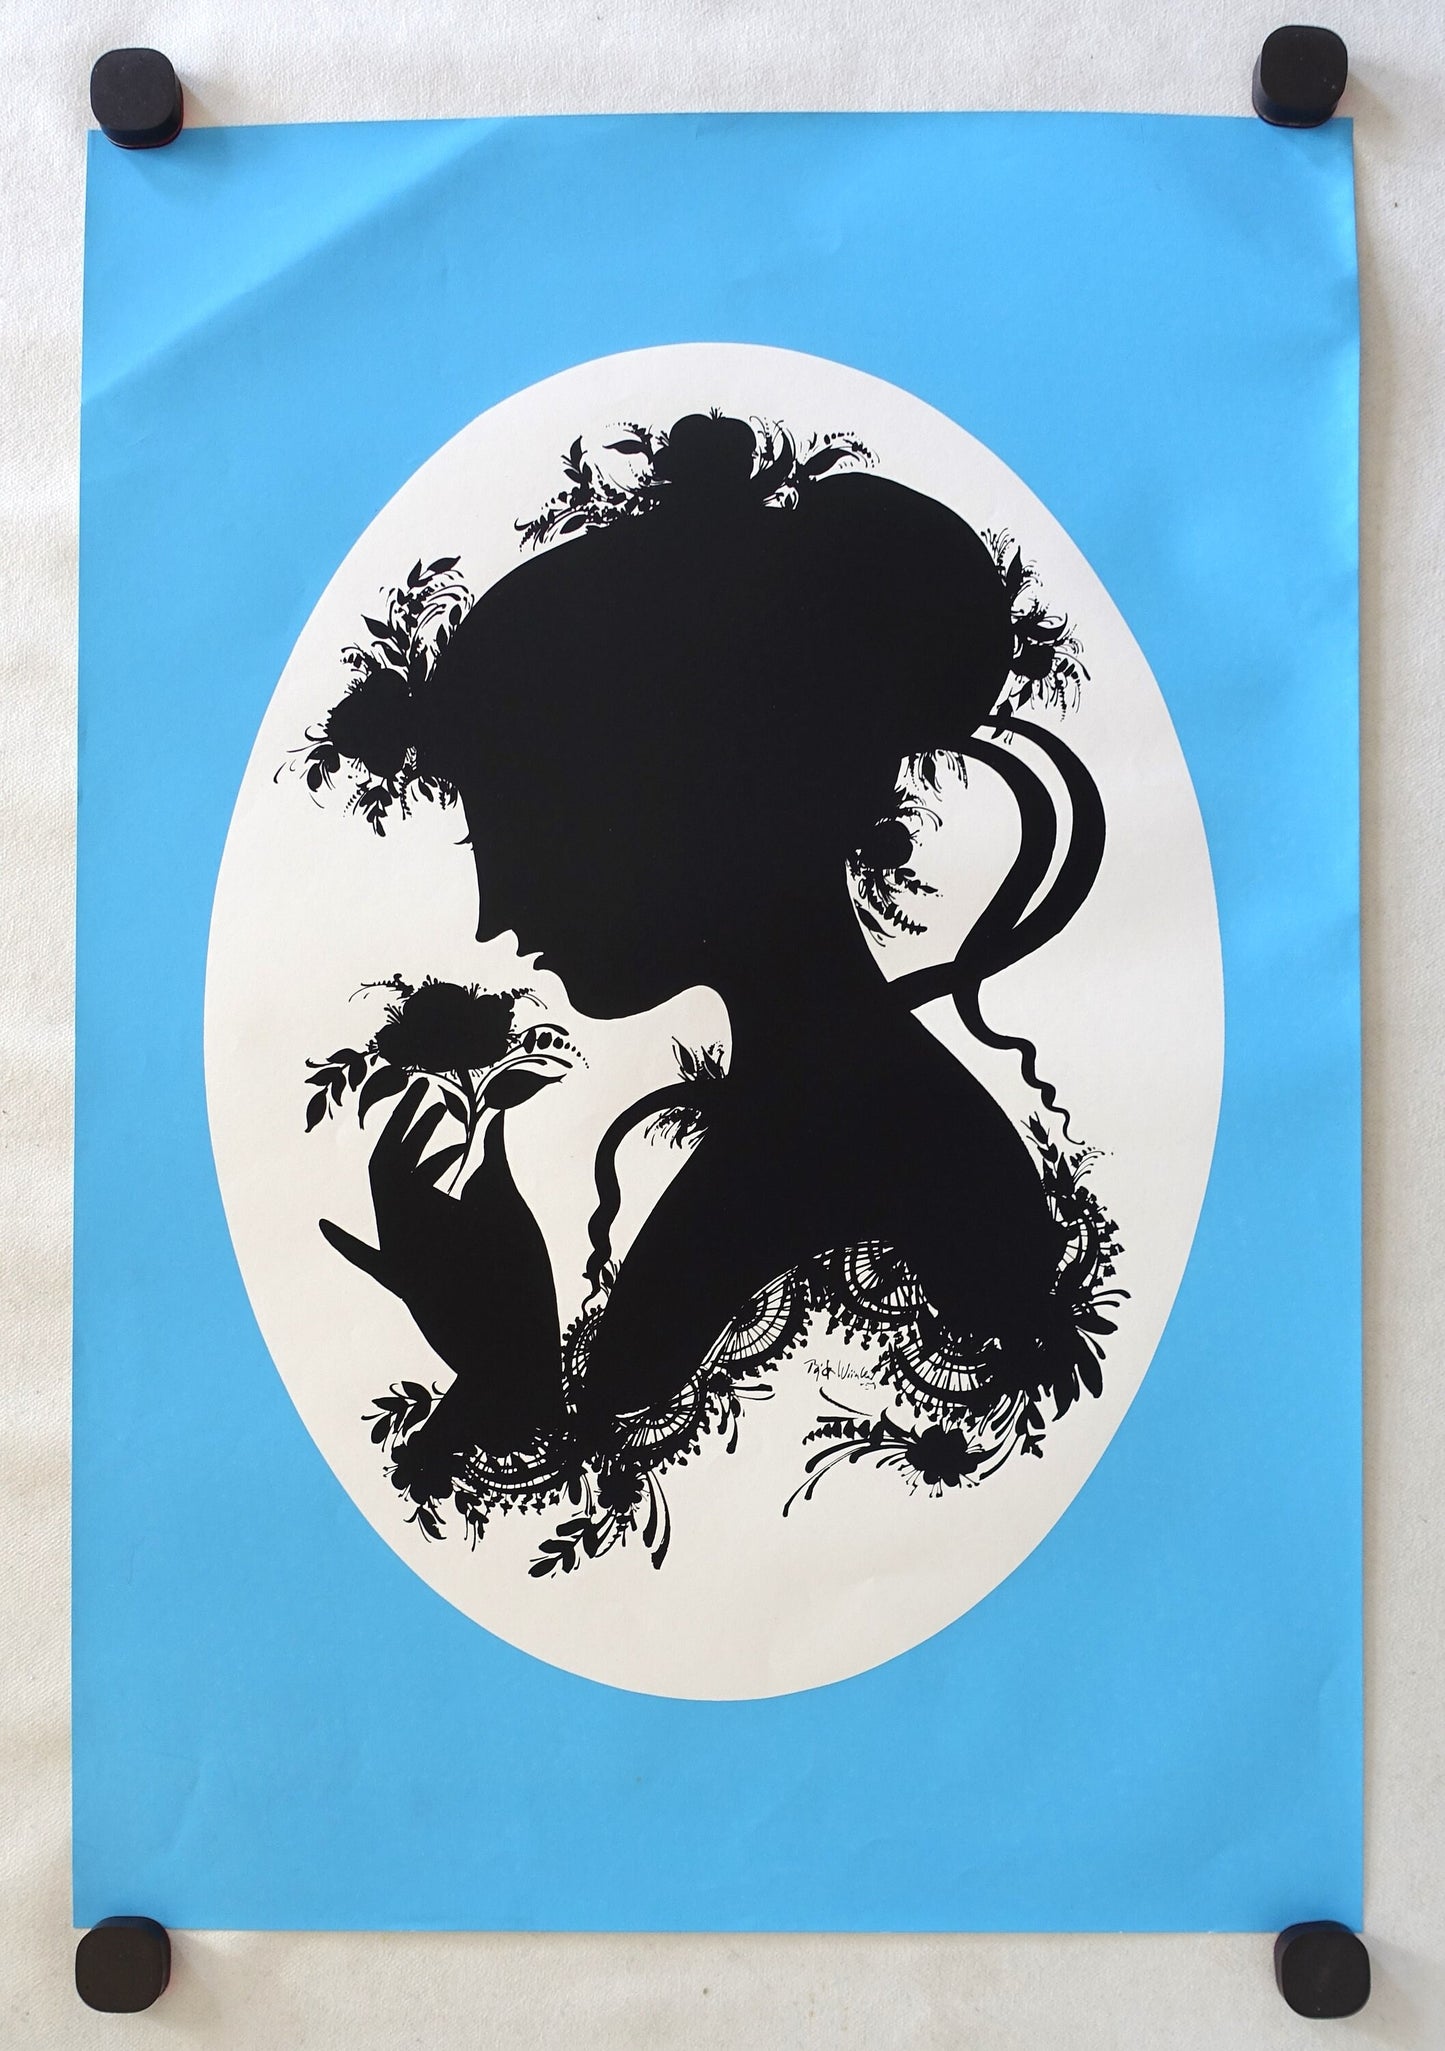 1959 Wiinblad's "Lady of the Camellias" (Blue version) - Original Vintage Poster